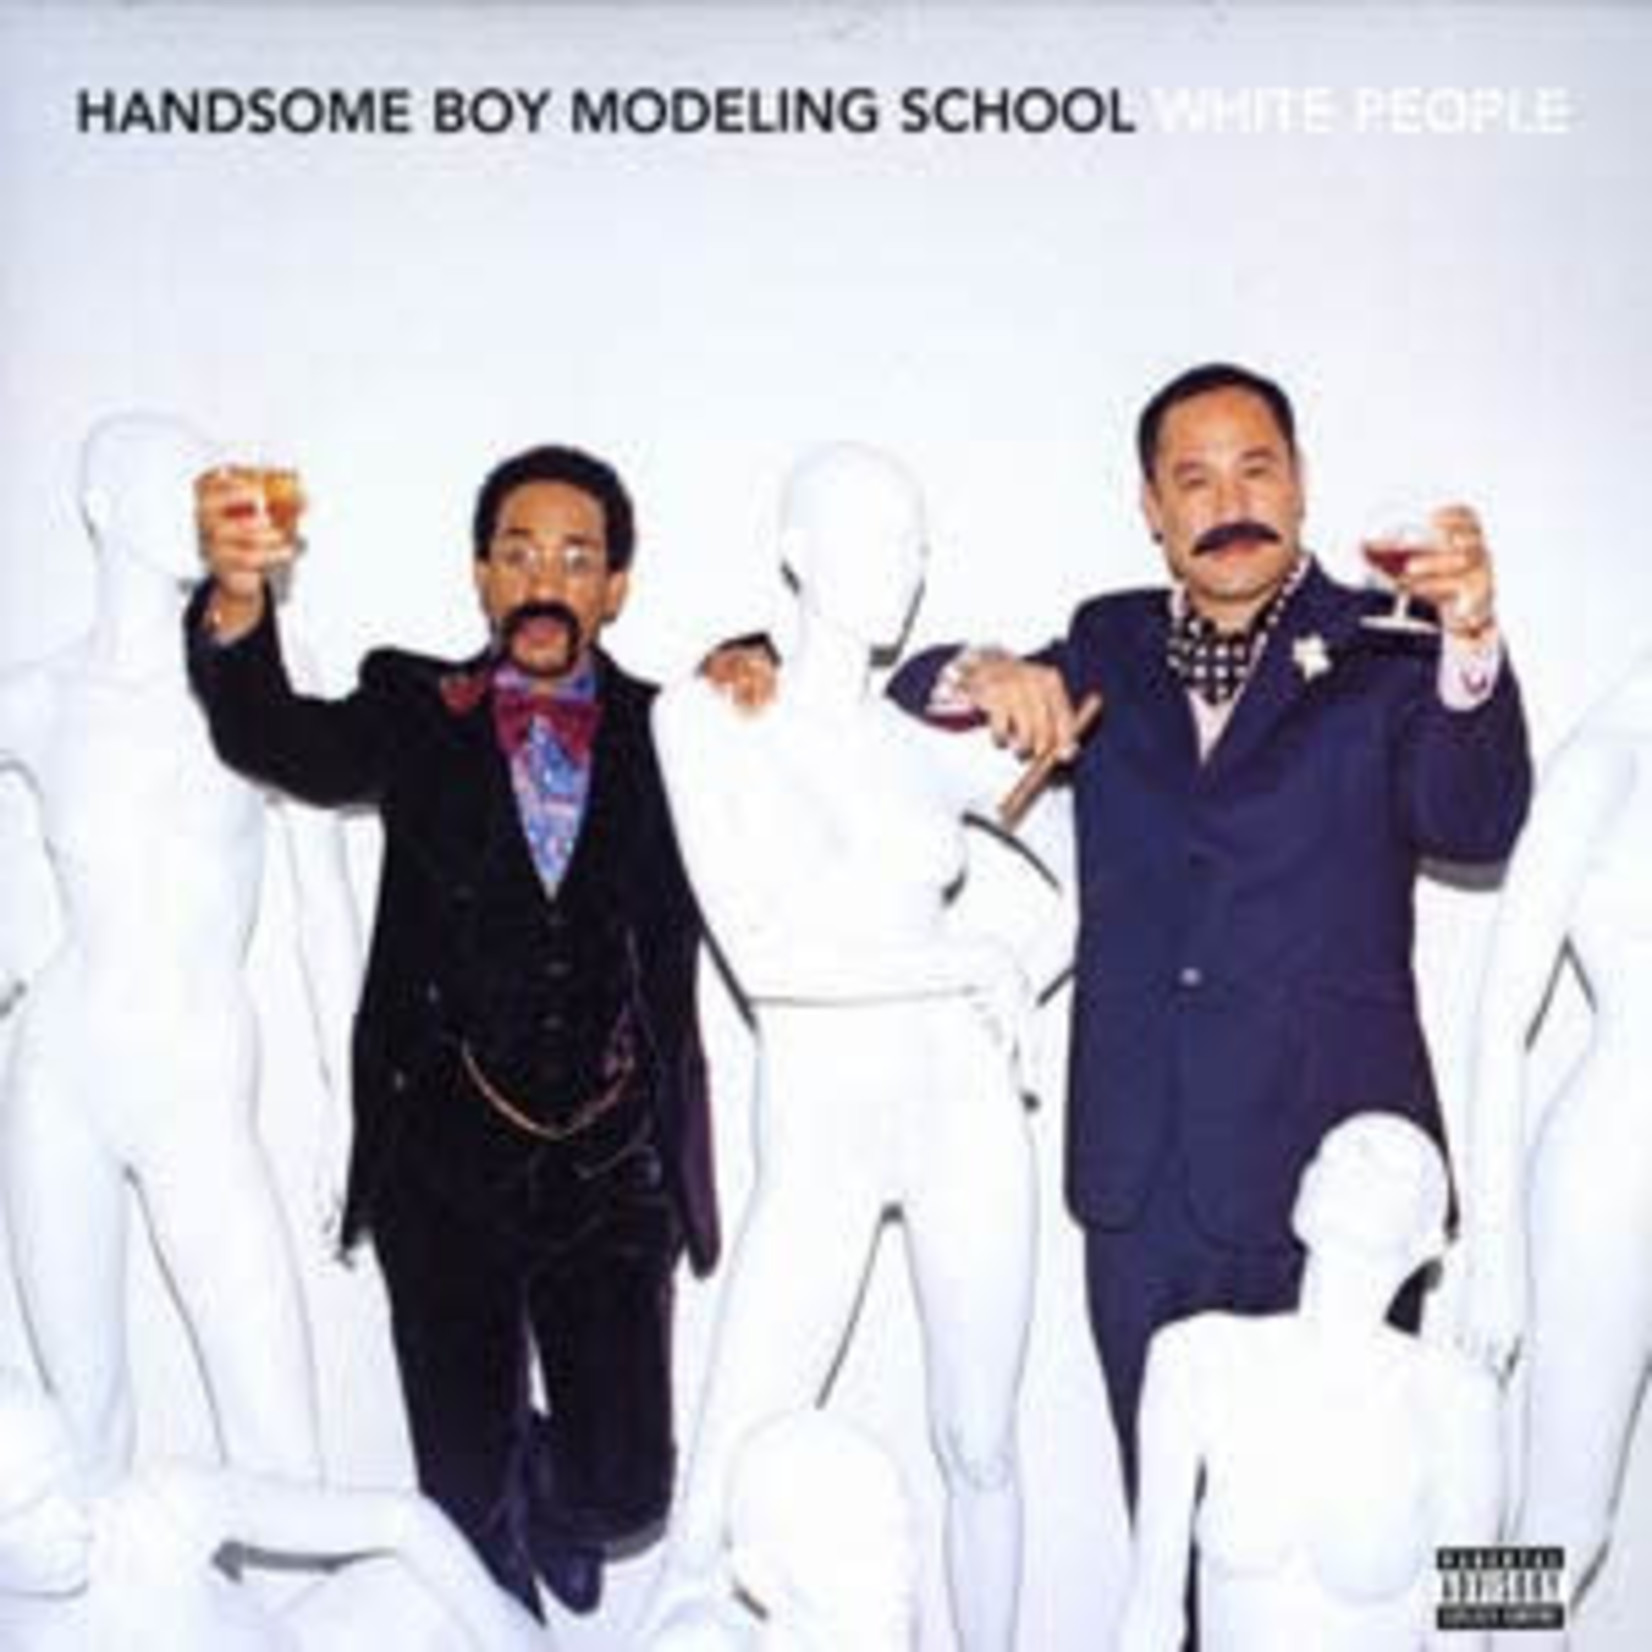 [New] Handsome Boy Modeling School: White People (2LP, white vinyl) [TOMMY BOY]